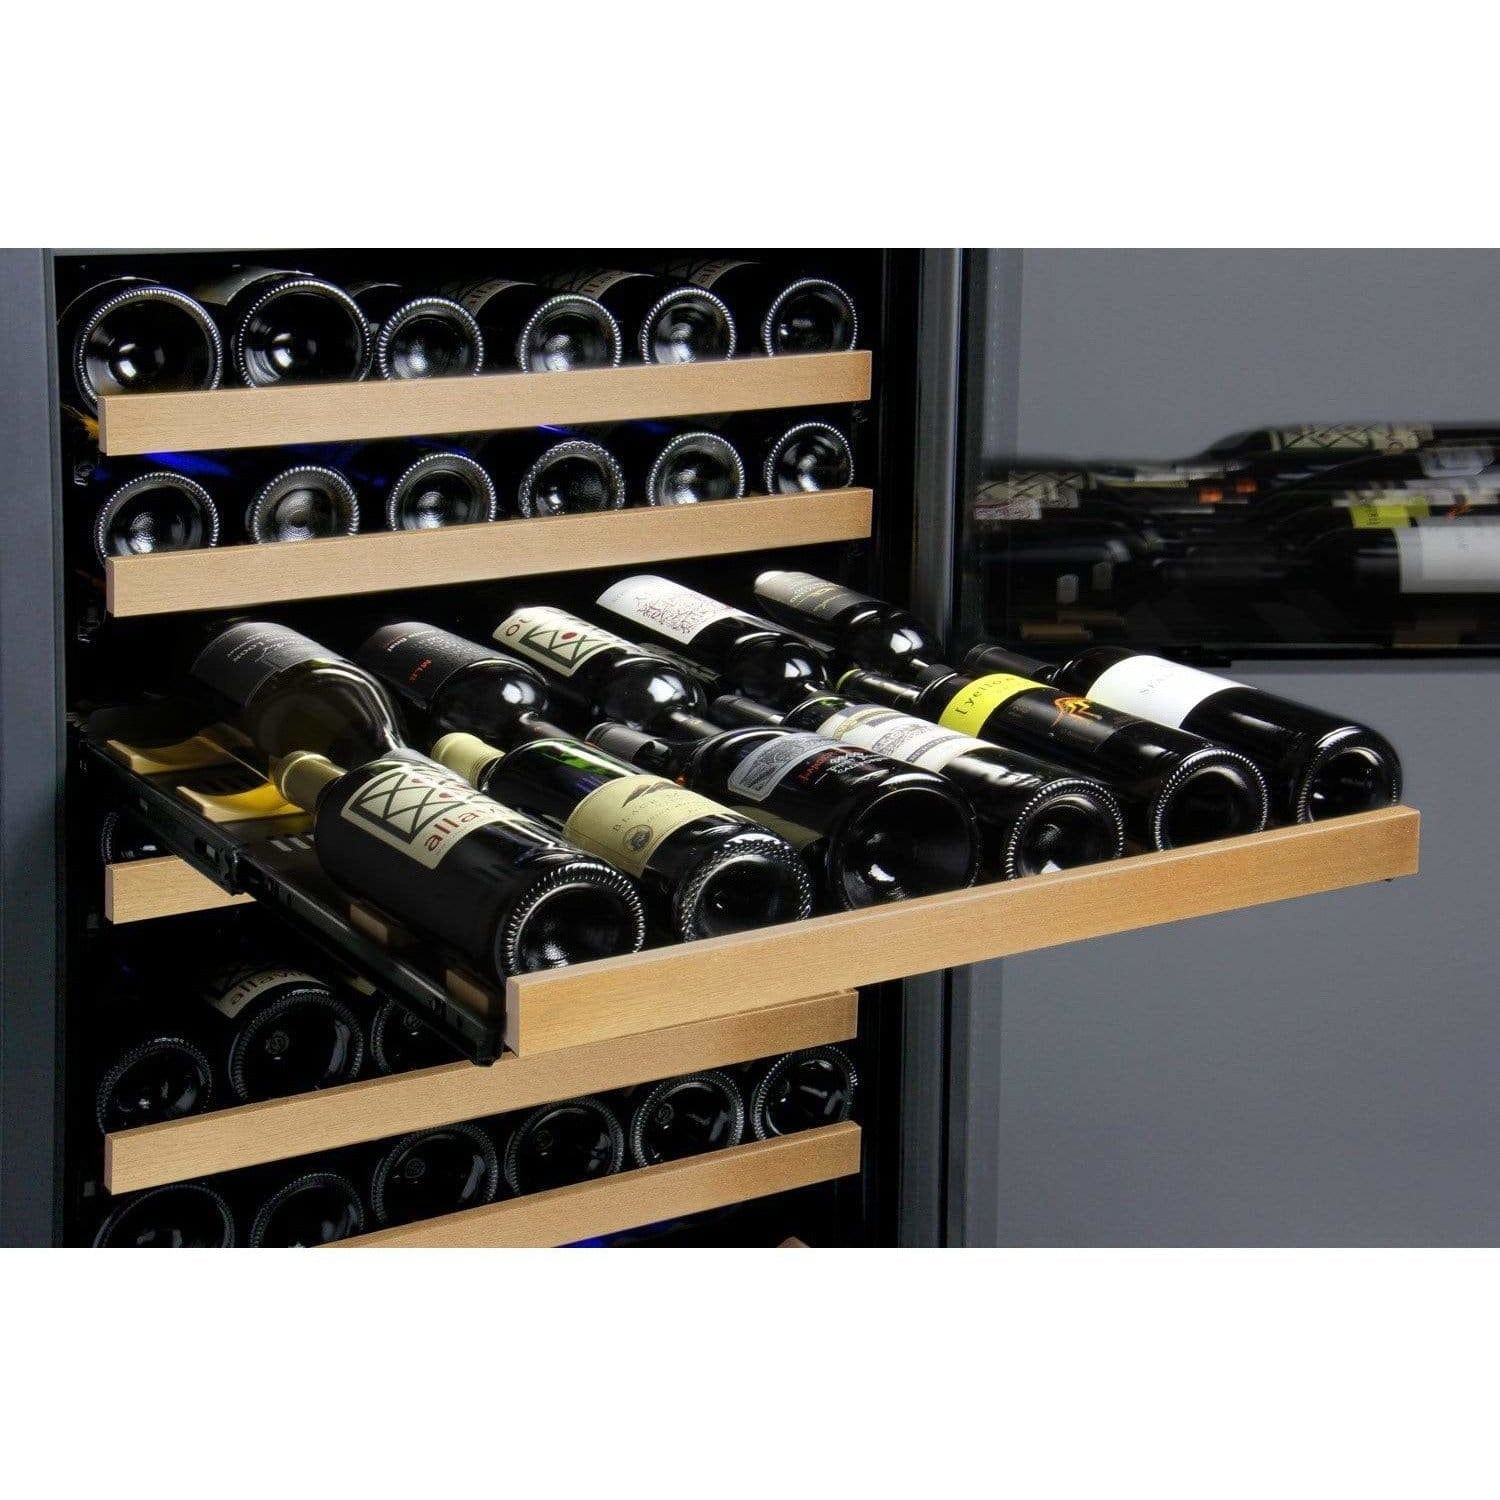 Allavino FlexCount 177 Bottle Black Door Right Hinge Wine Fridge VSWR177-1BWRN Wine Coolers VSWR177-1BWRN Luxury Appliances Direct